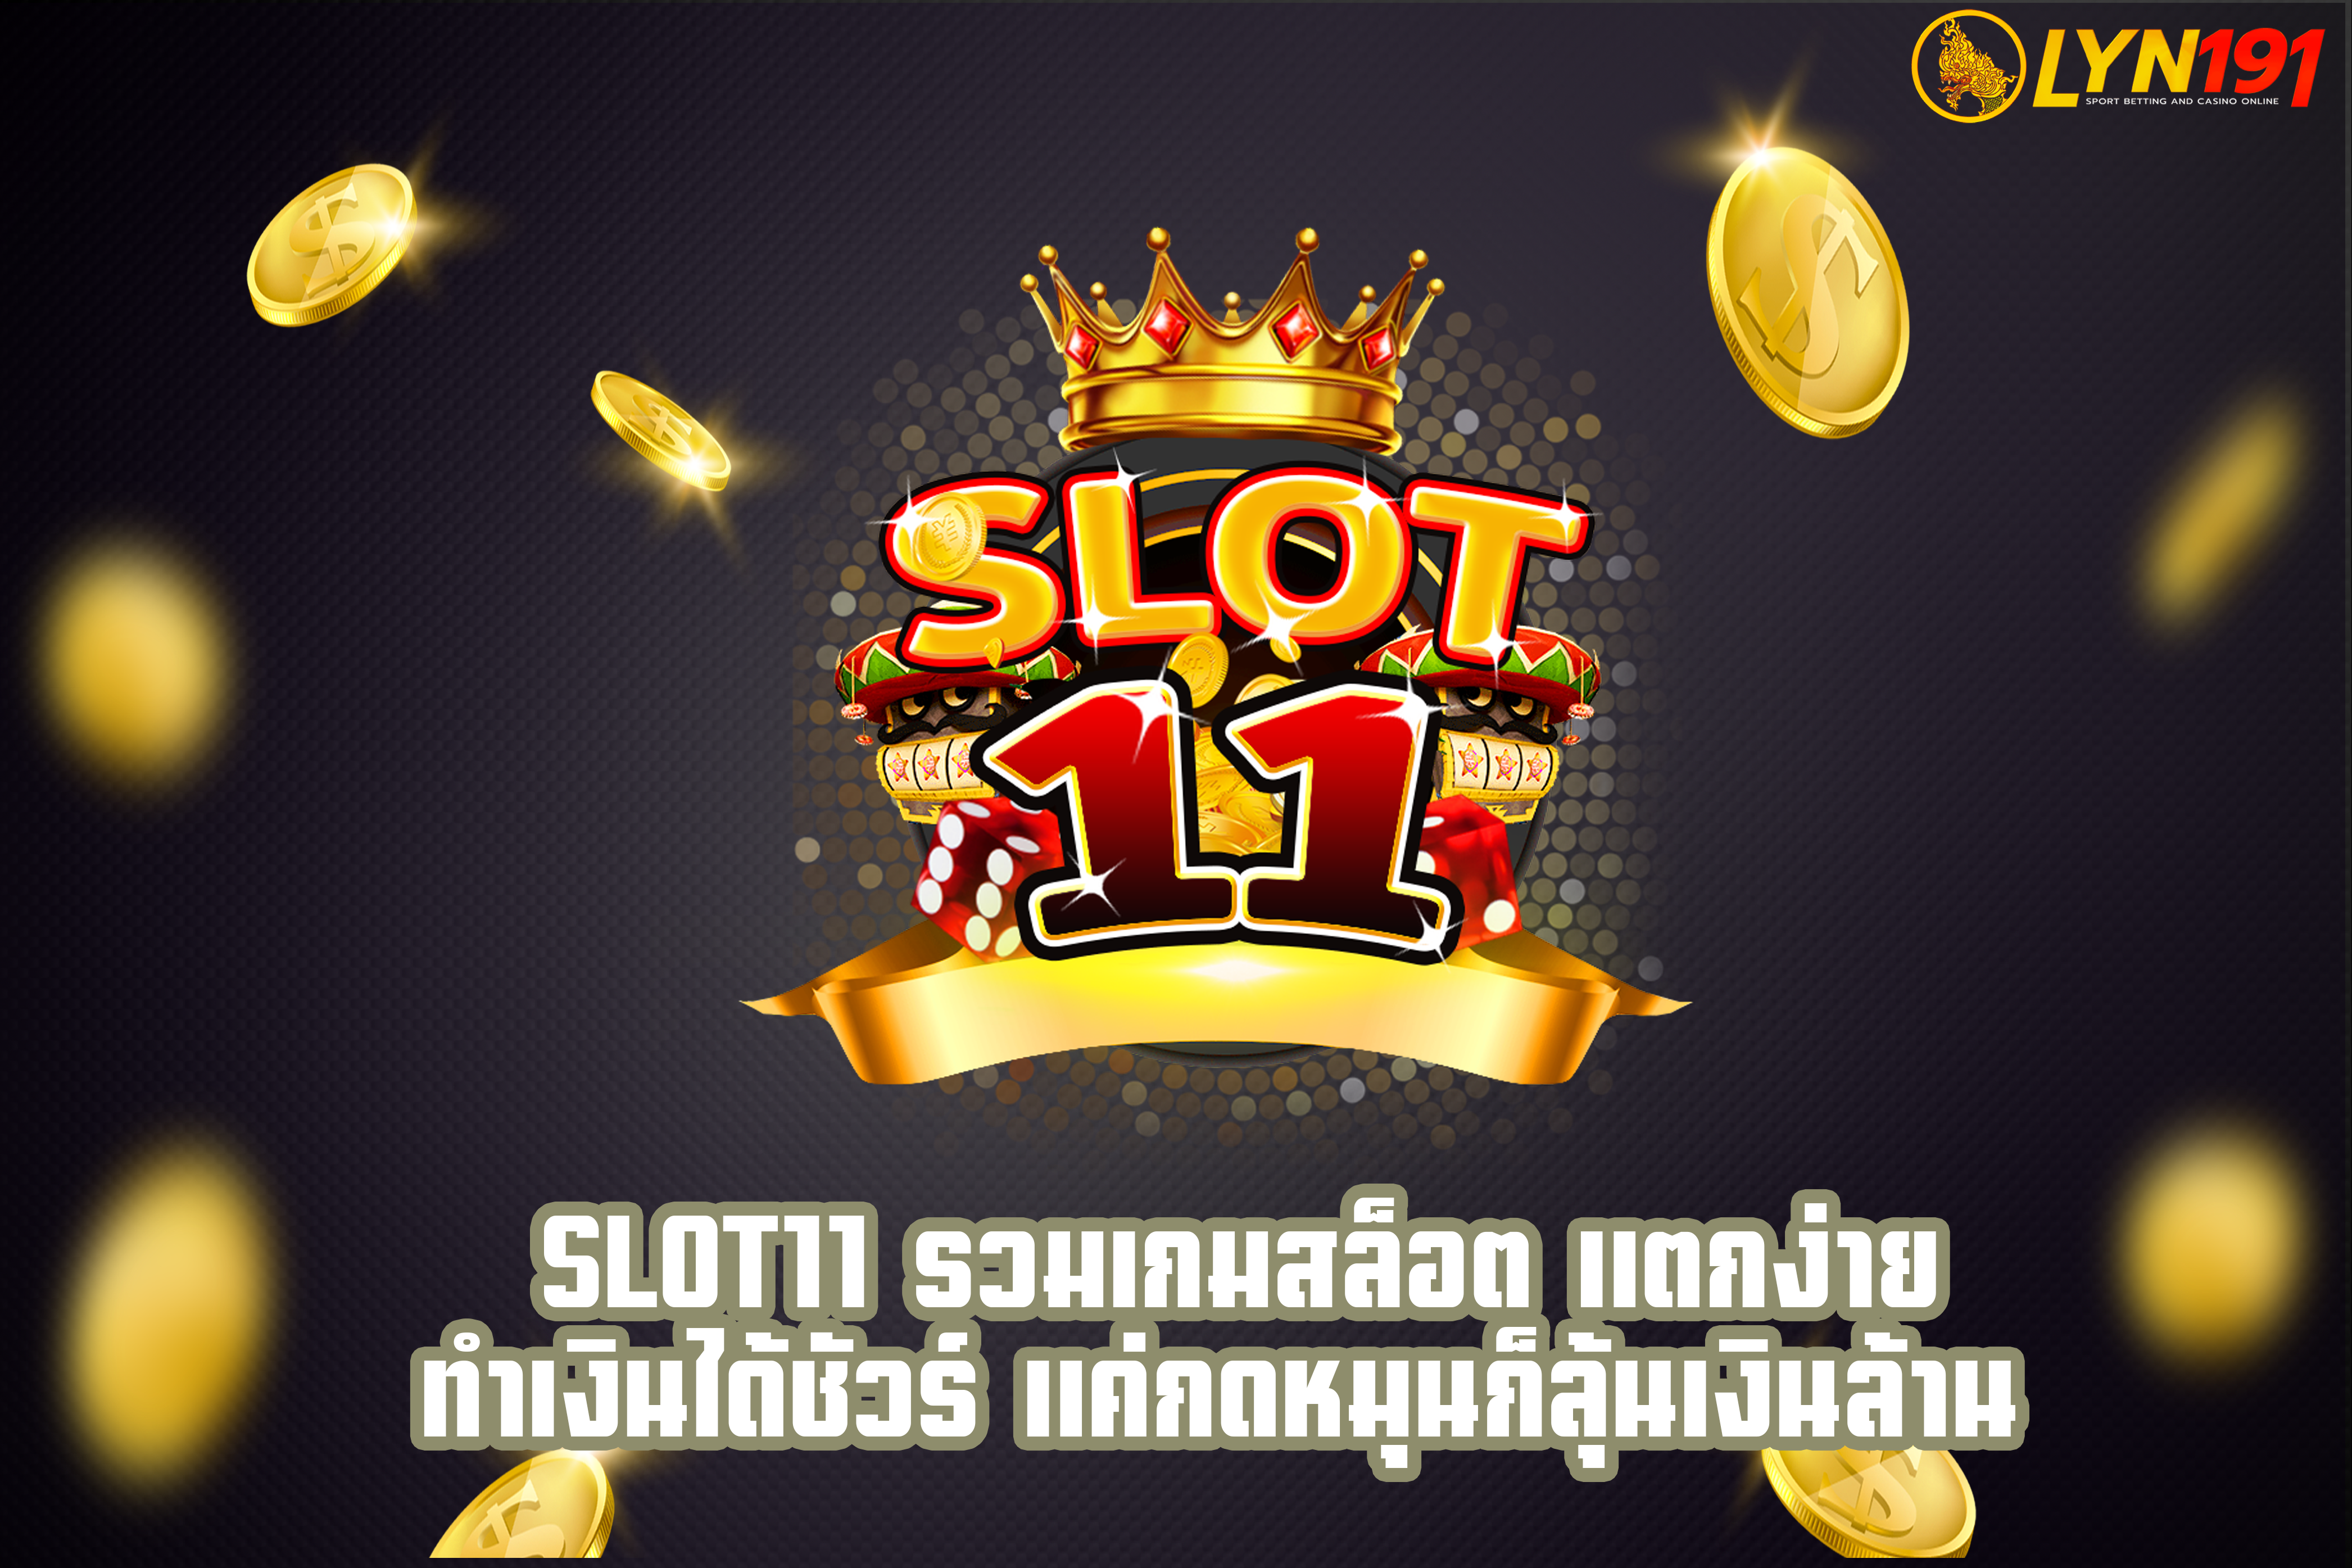 Slot11 รวมเกมสล็อต แตกง่าย ทำเงินได้ชัวร์ แค่กดหมุนก็ลุ้นเงินล้าน